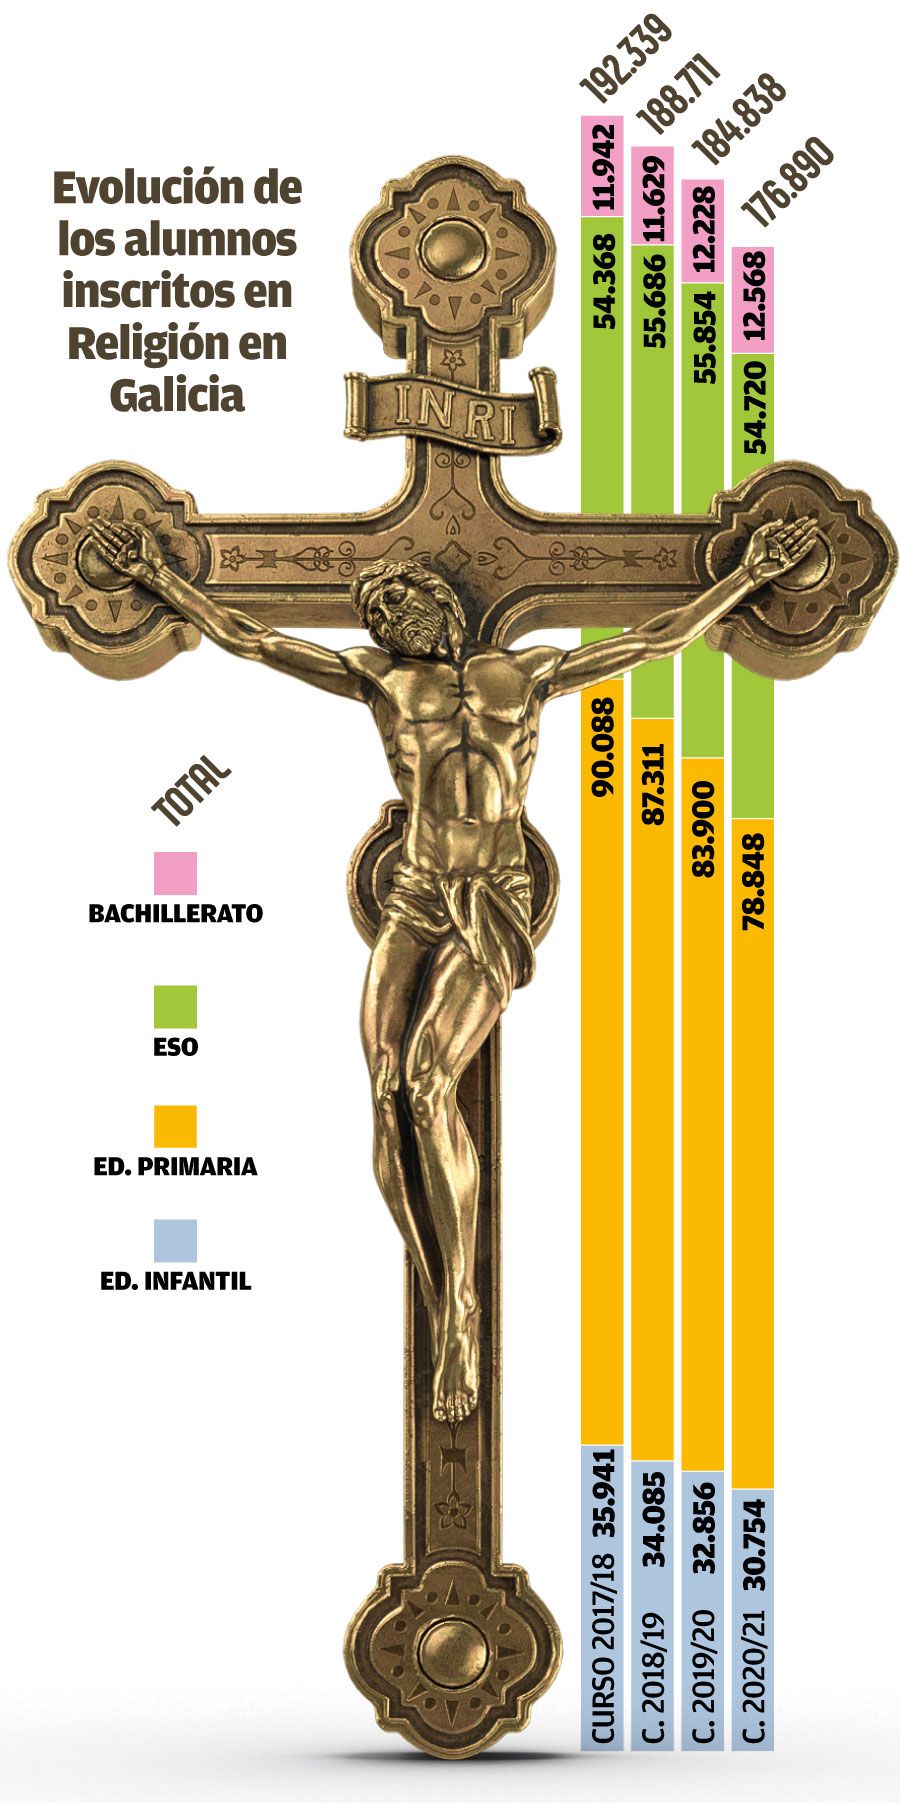 Inscritos en Religión en Galicia